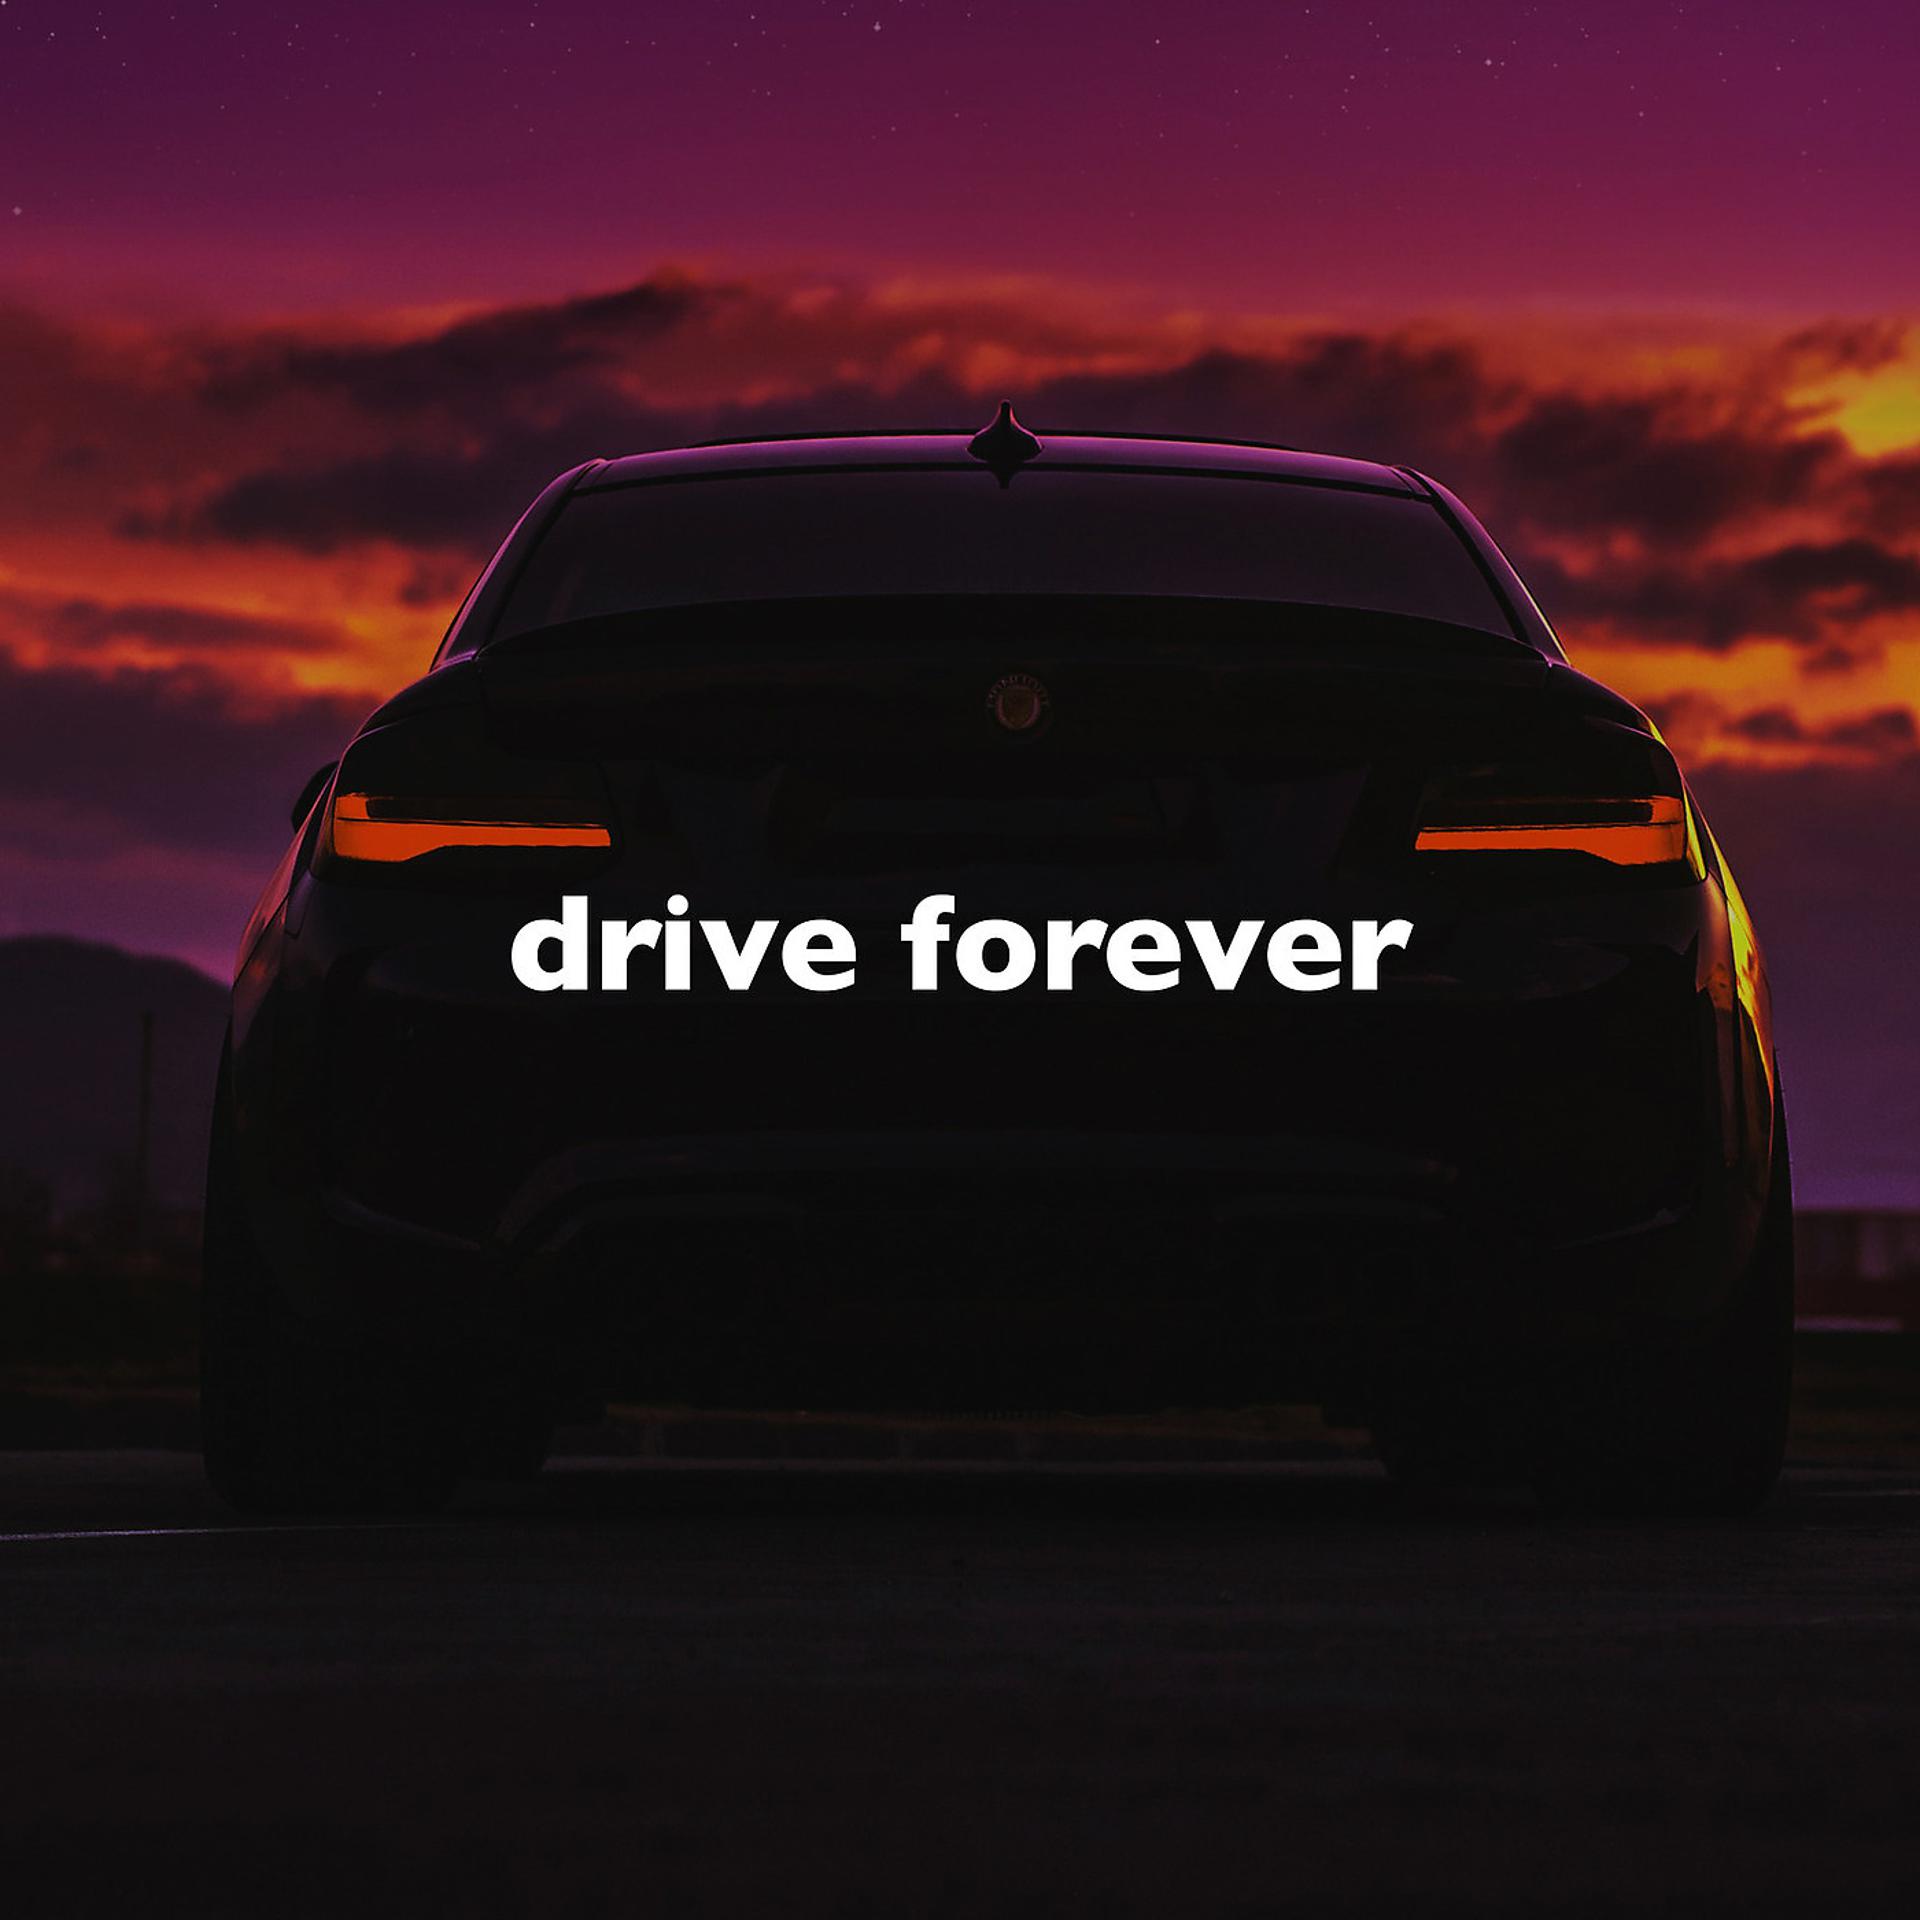 Drive forever babbeo. Drive Forever. Drive Forever Forever. Drive in Codeine Forever. Drive Forever Felax.